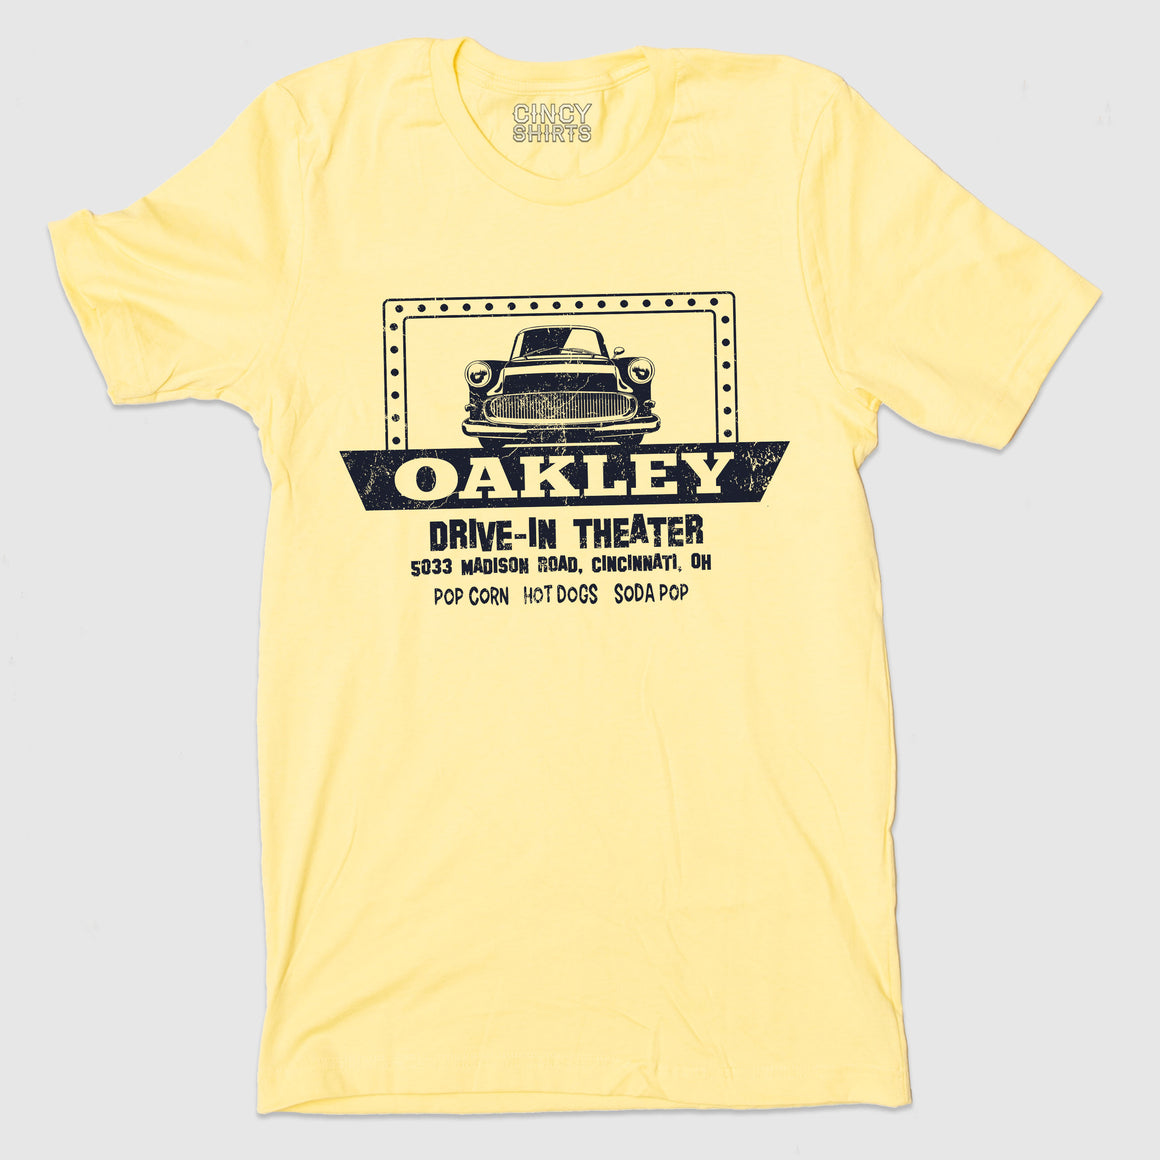 Oakley Drive-In Theater - Cincy Shirts